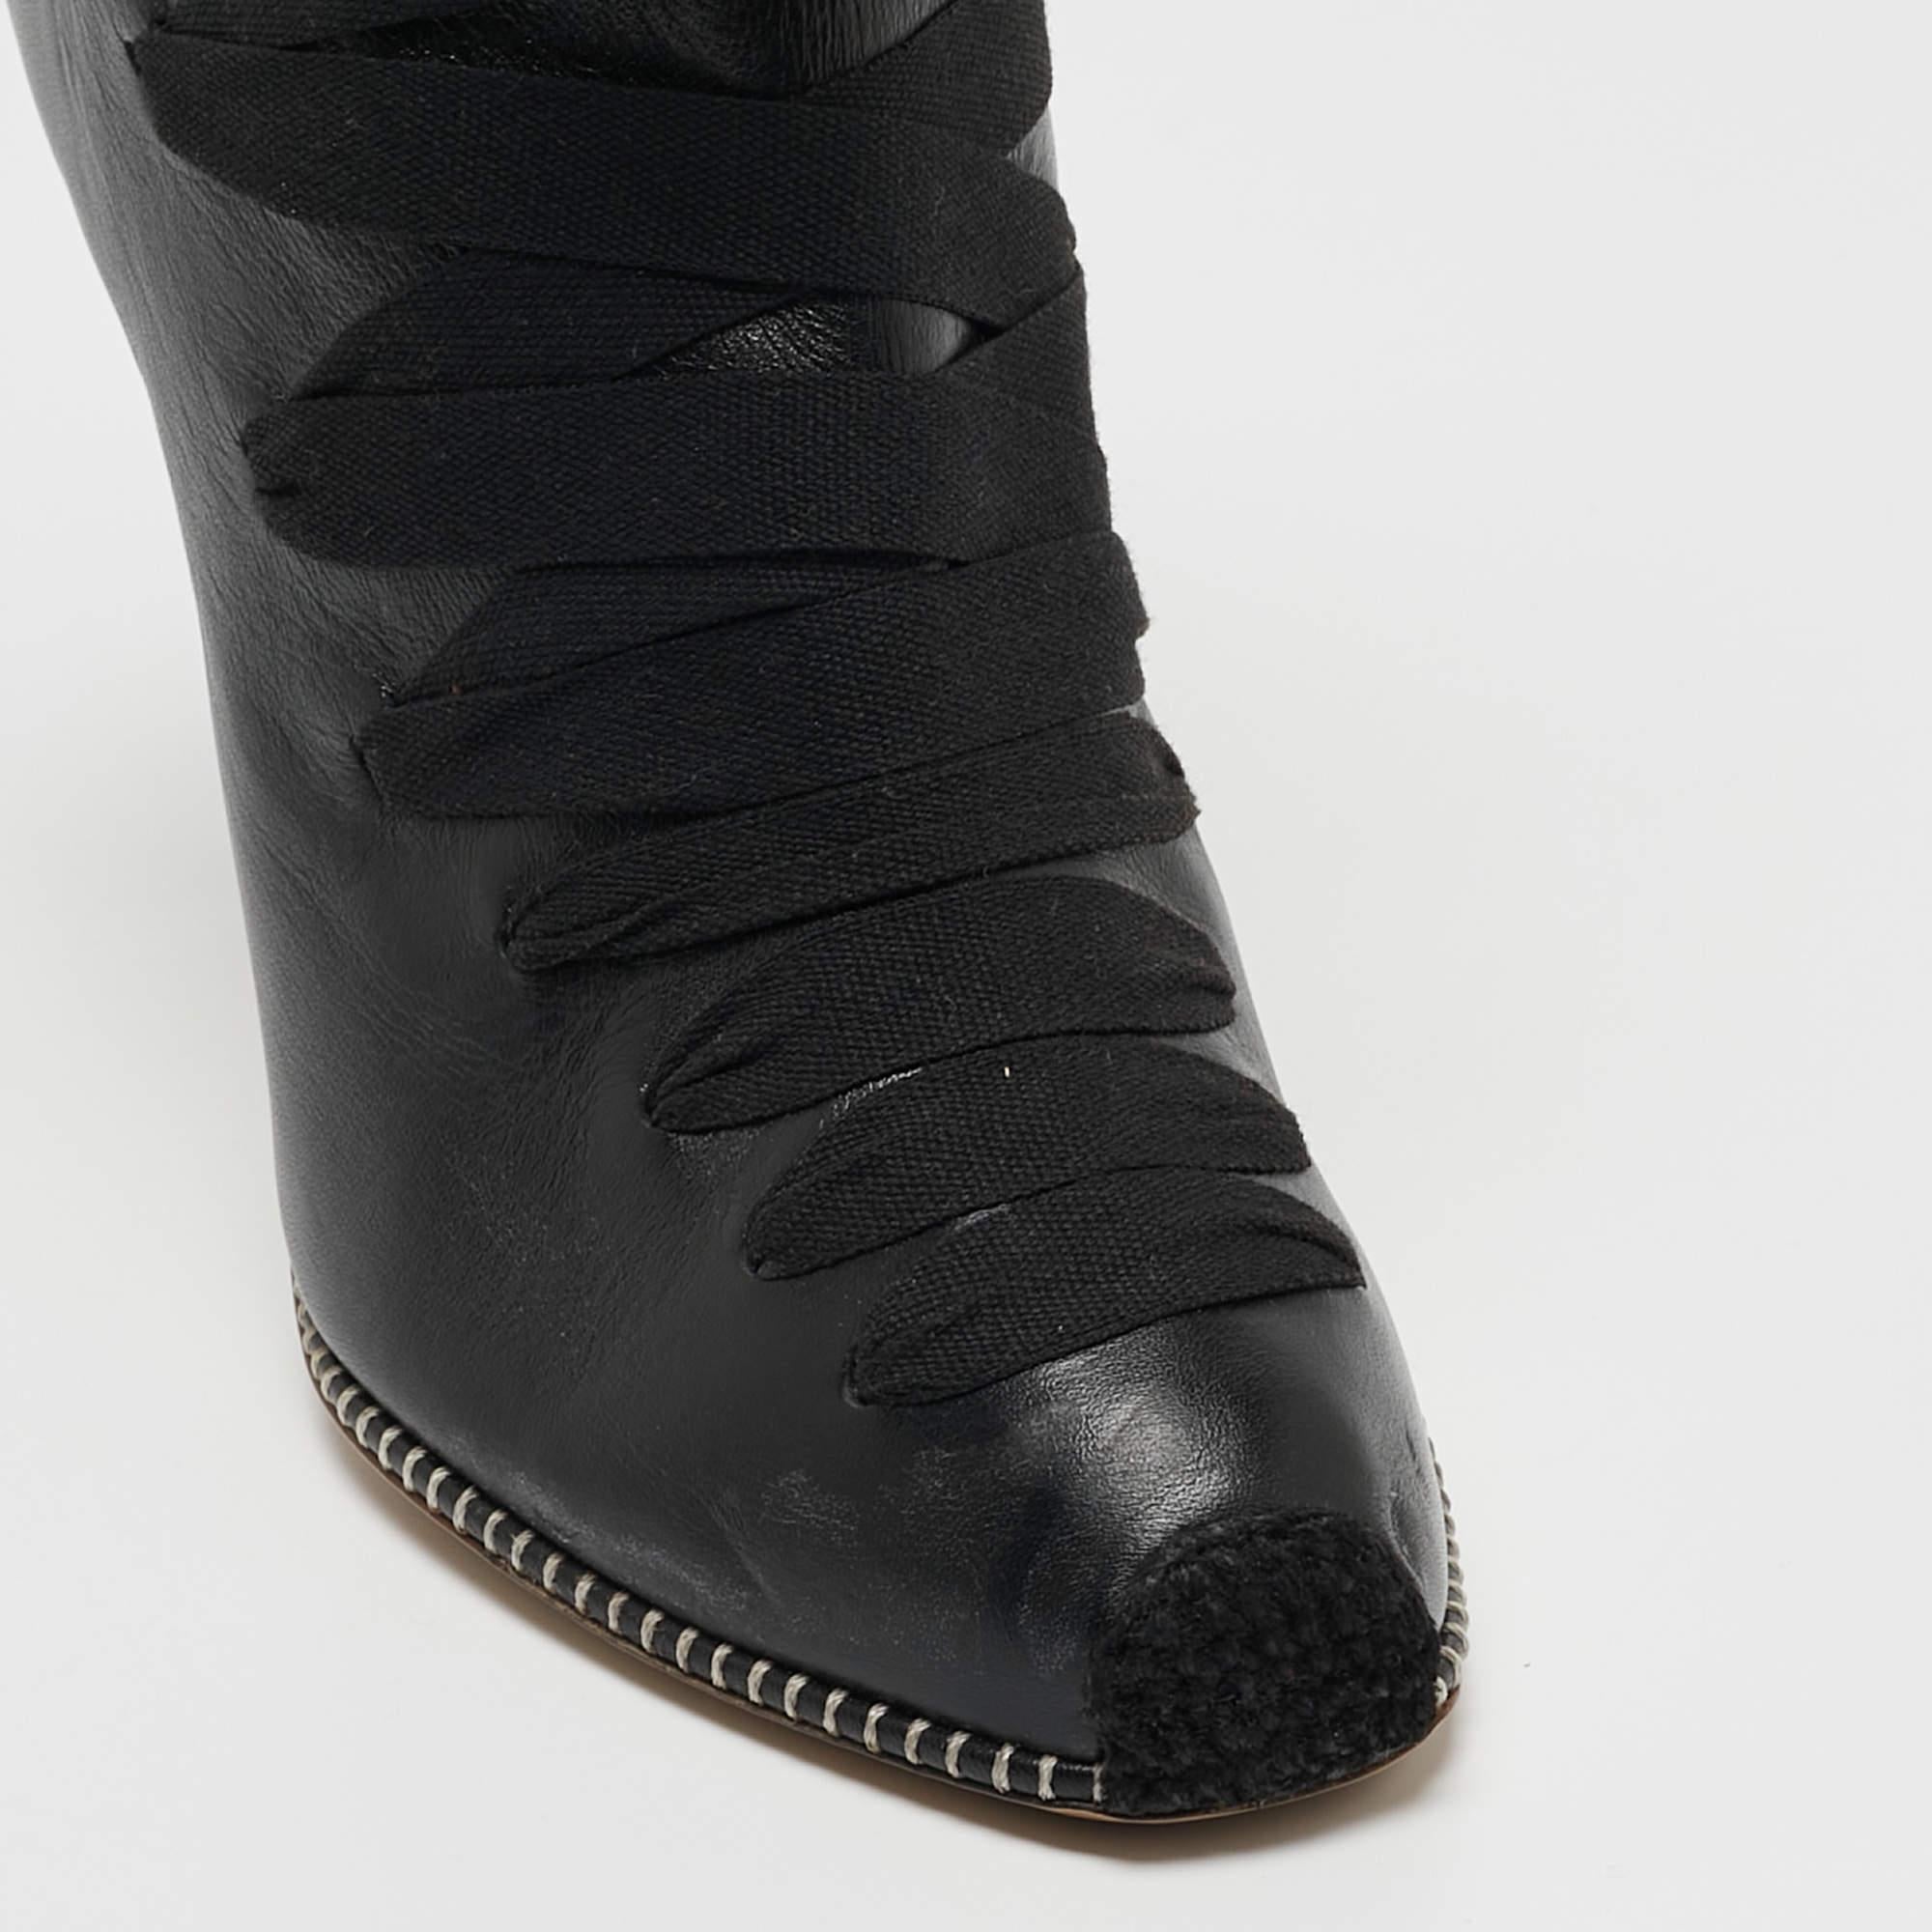 Altuzarra Black Leather Ankle Boots Size 39 For Sale 1